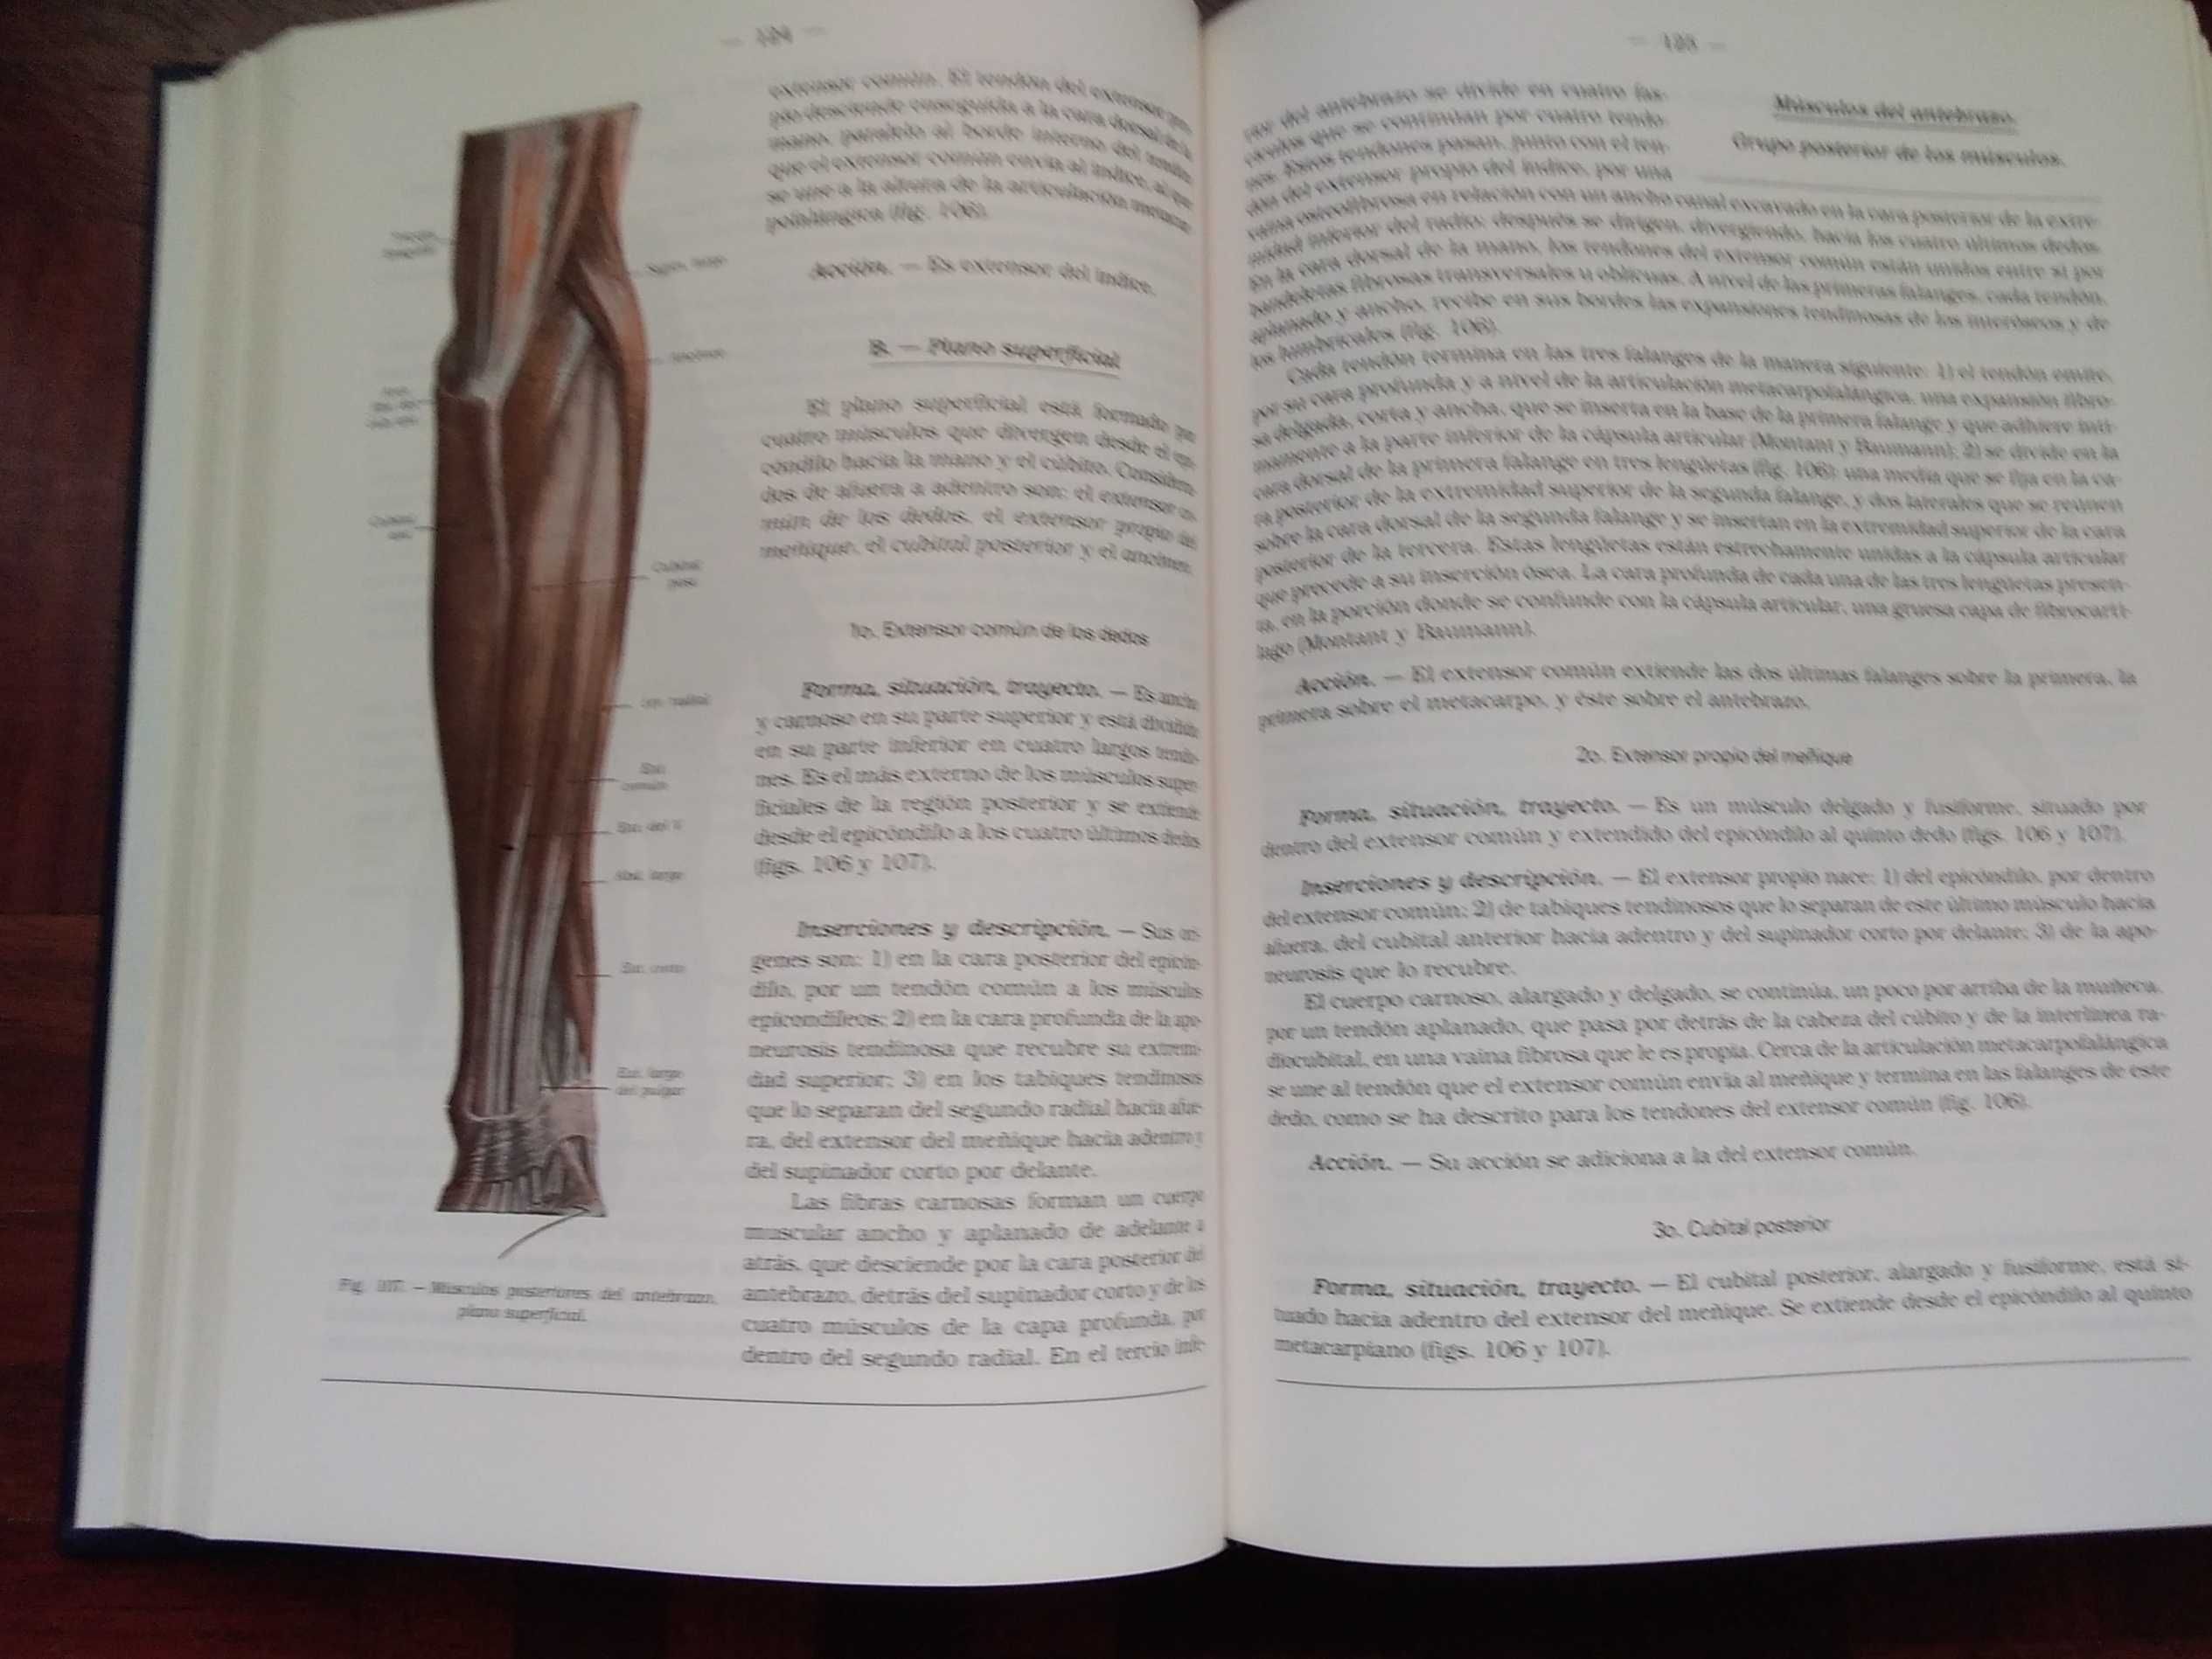 Anatomia Humana Descriptiva, Topografica Y Funcional, Rouviere Delmas